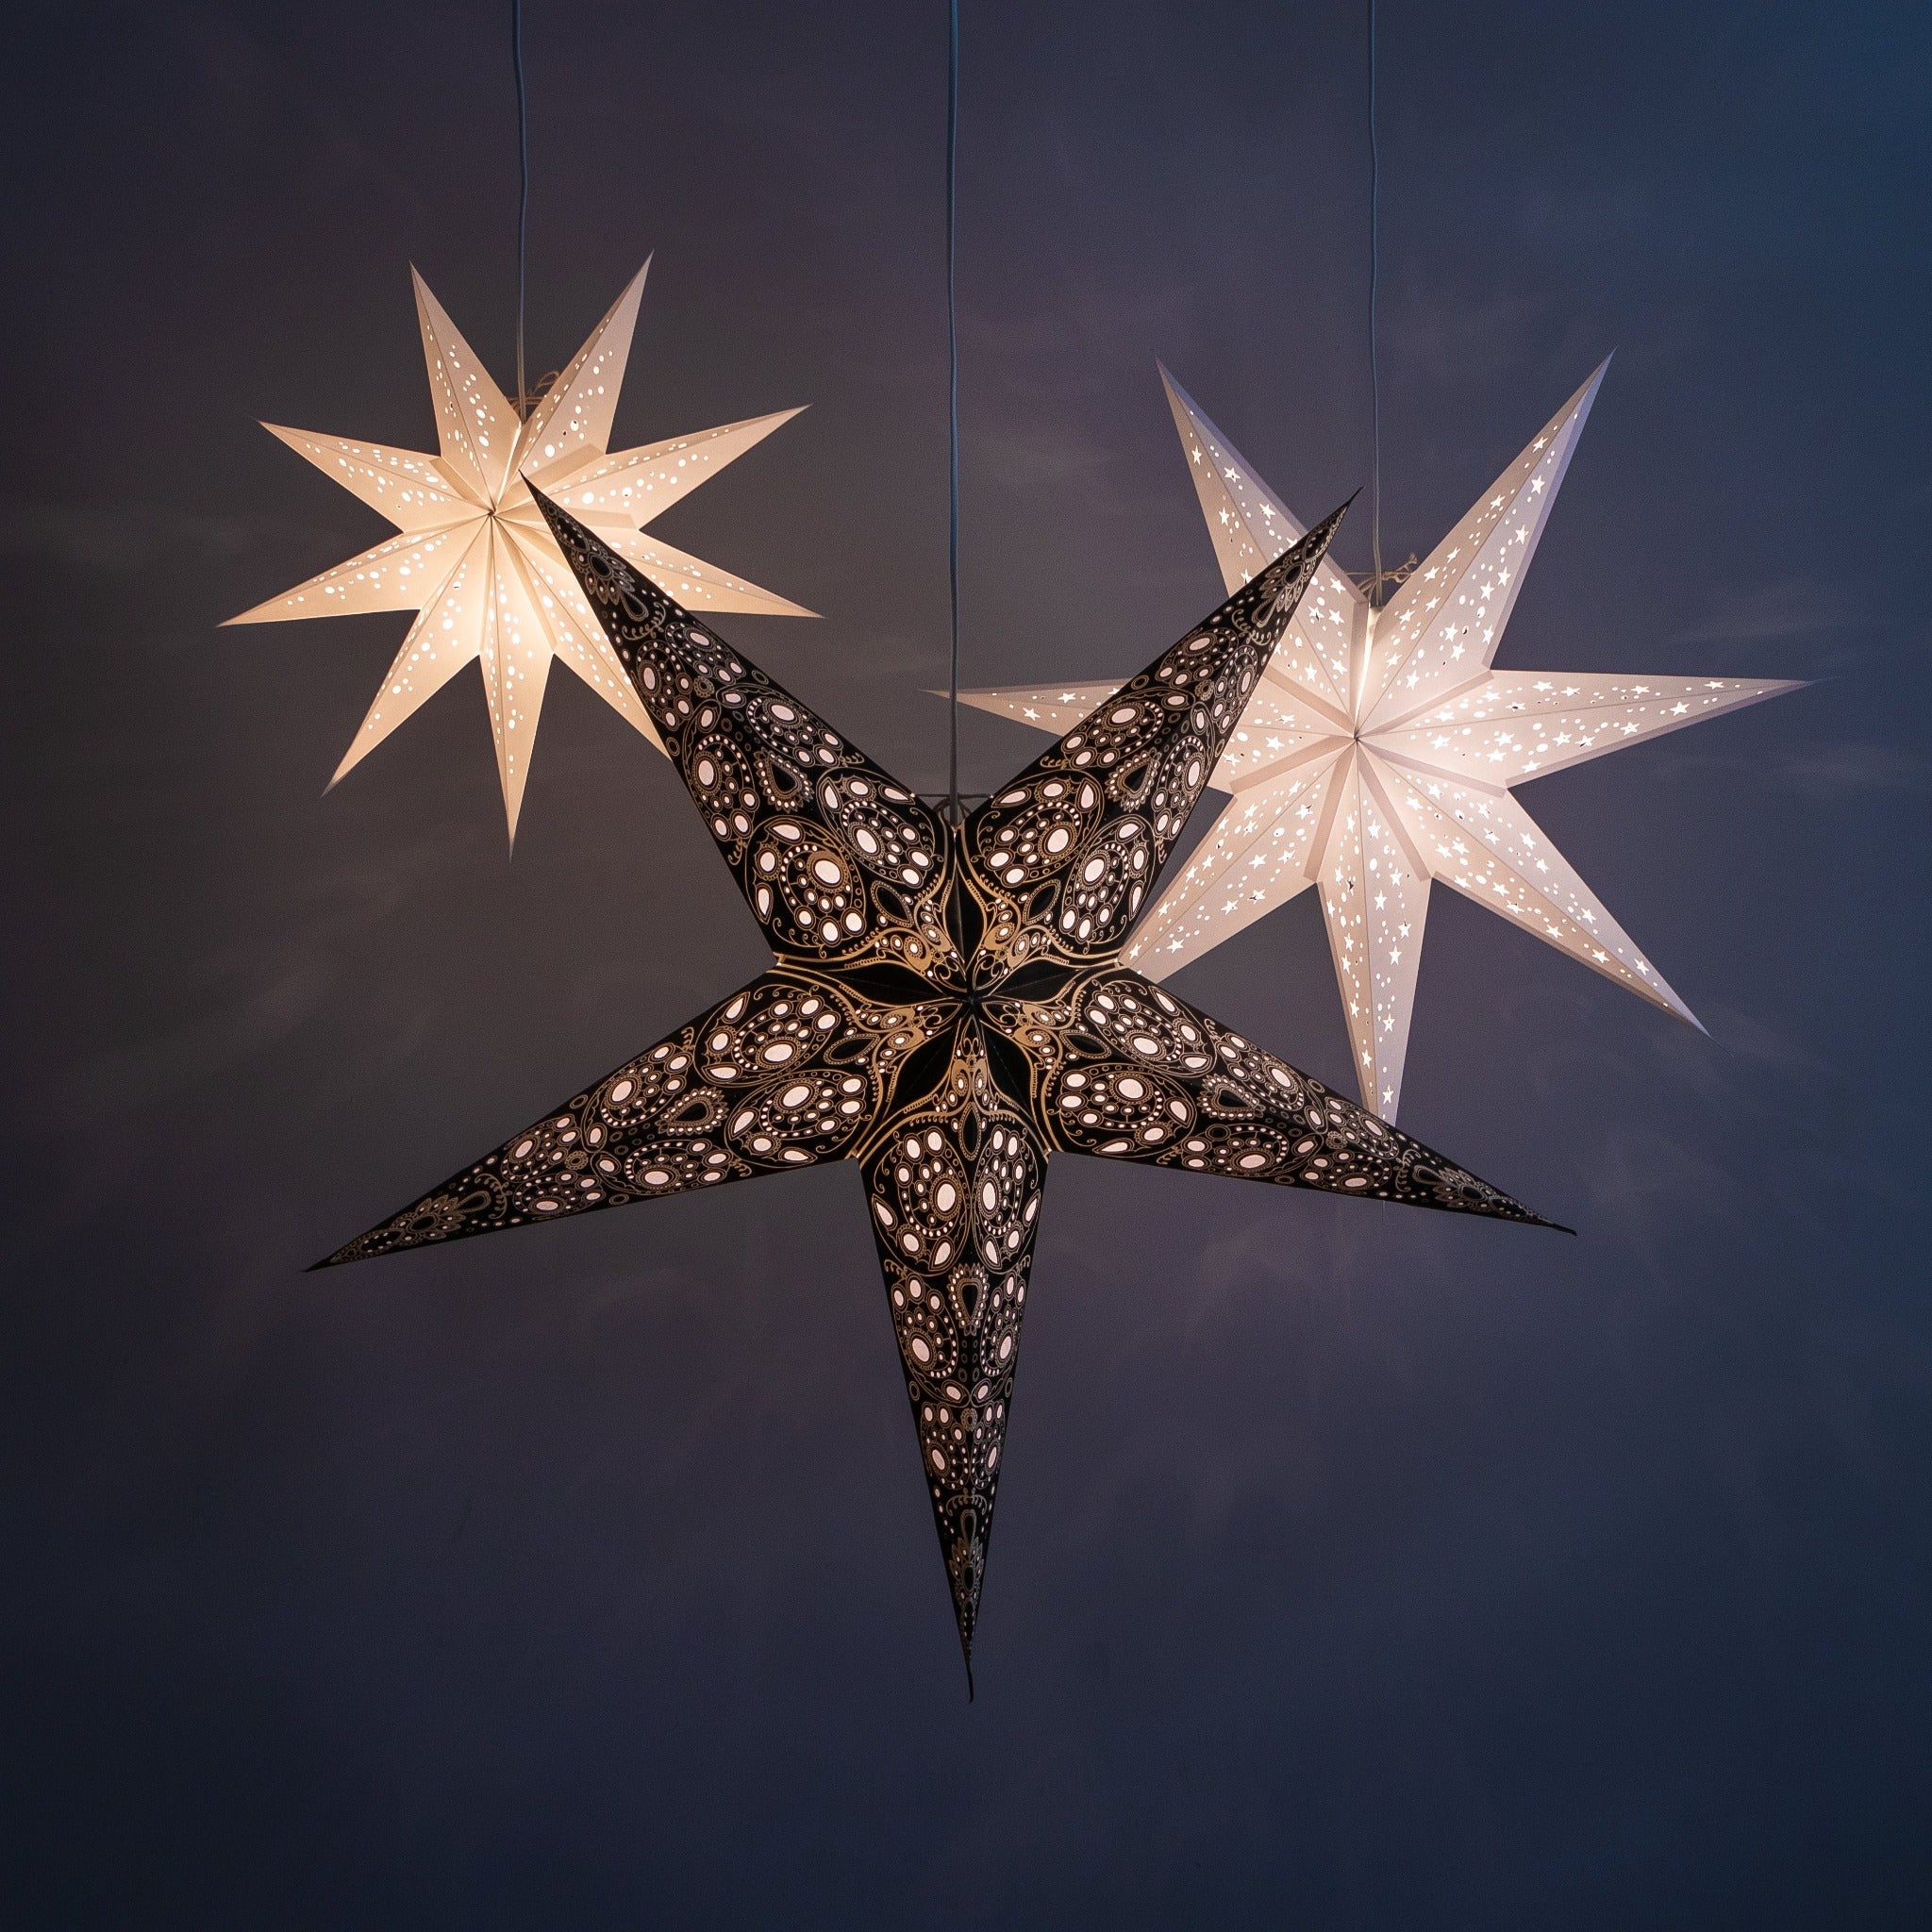 1 small white, 1 white and 1 black/white star lantern illuminated 